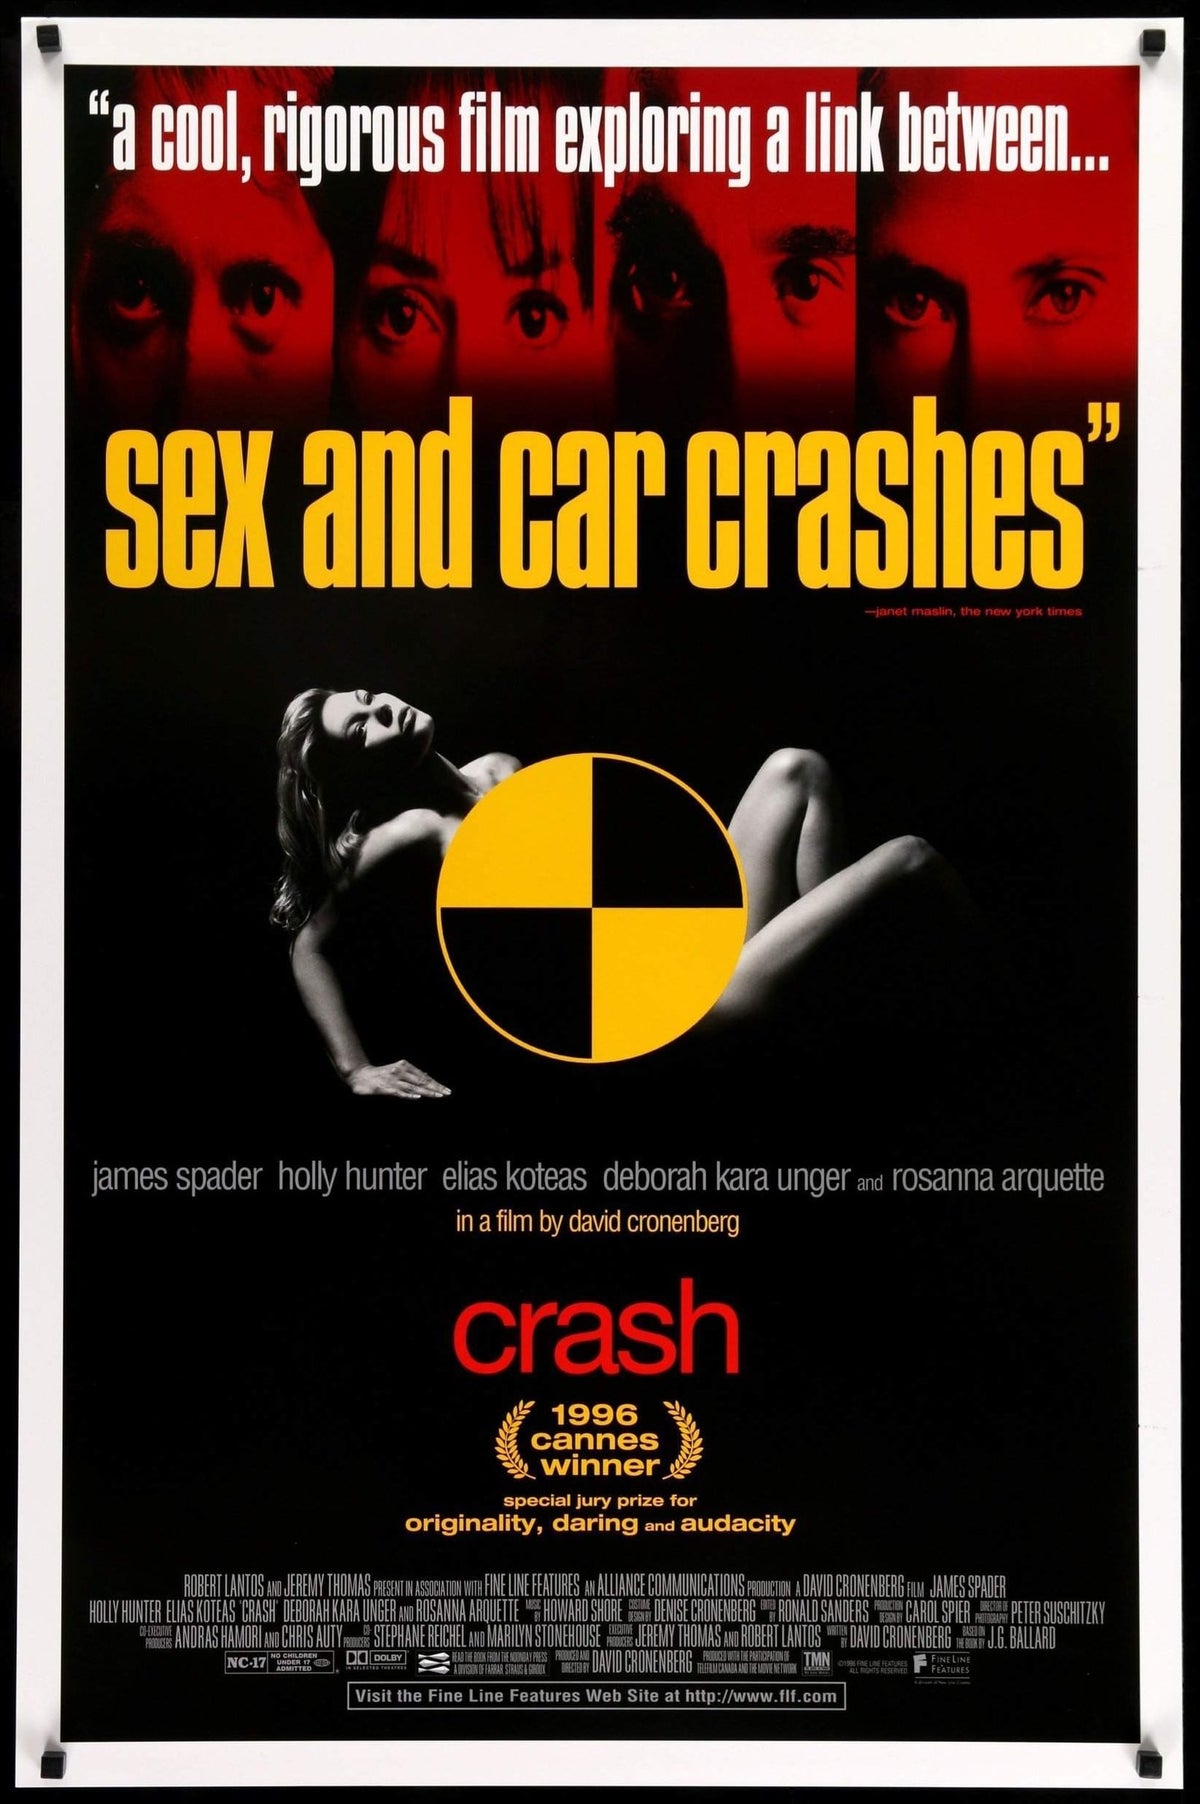 Crash (1996) original movie poster for sale at Original Film Art